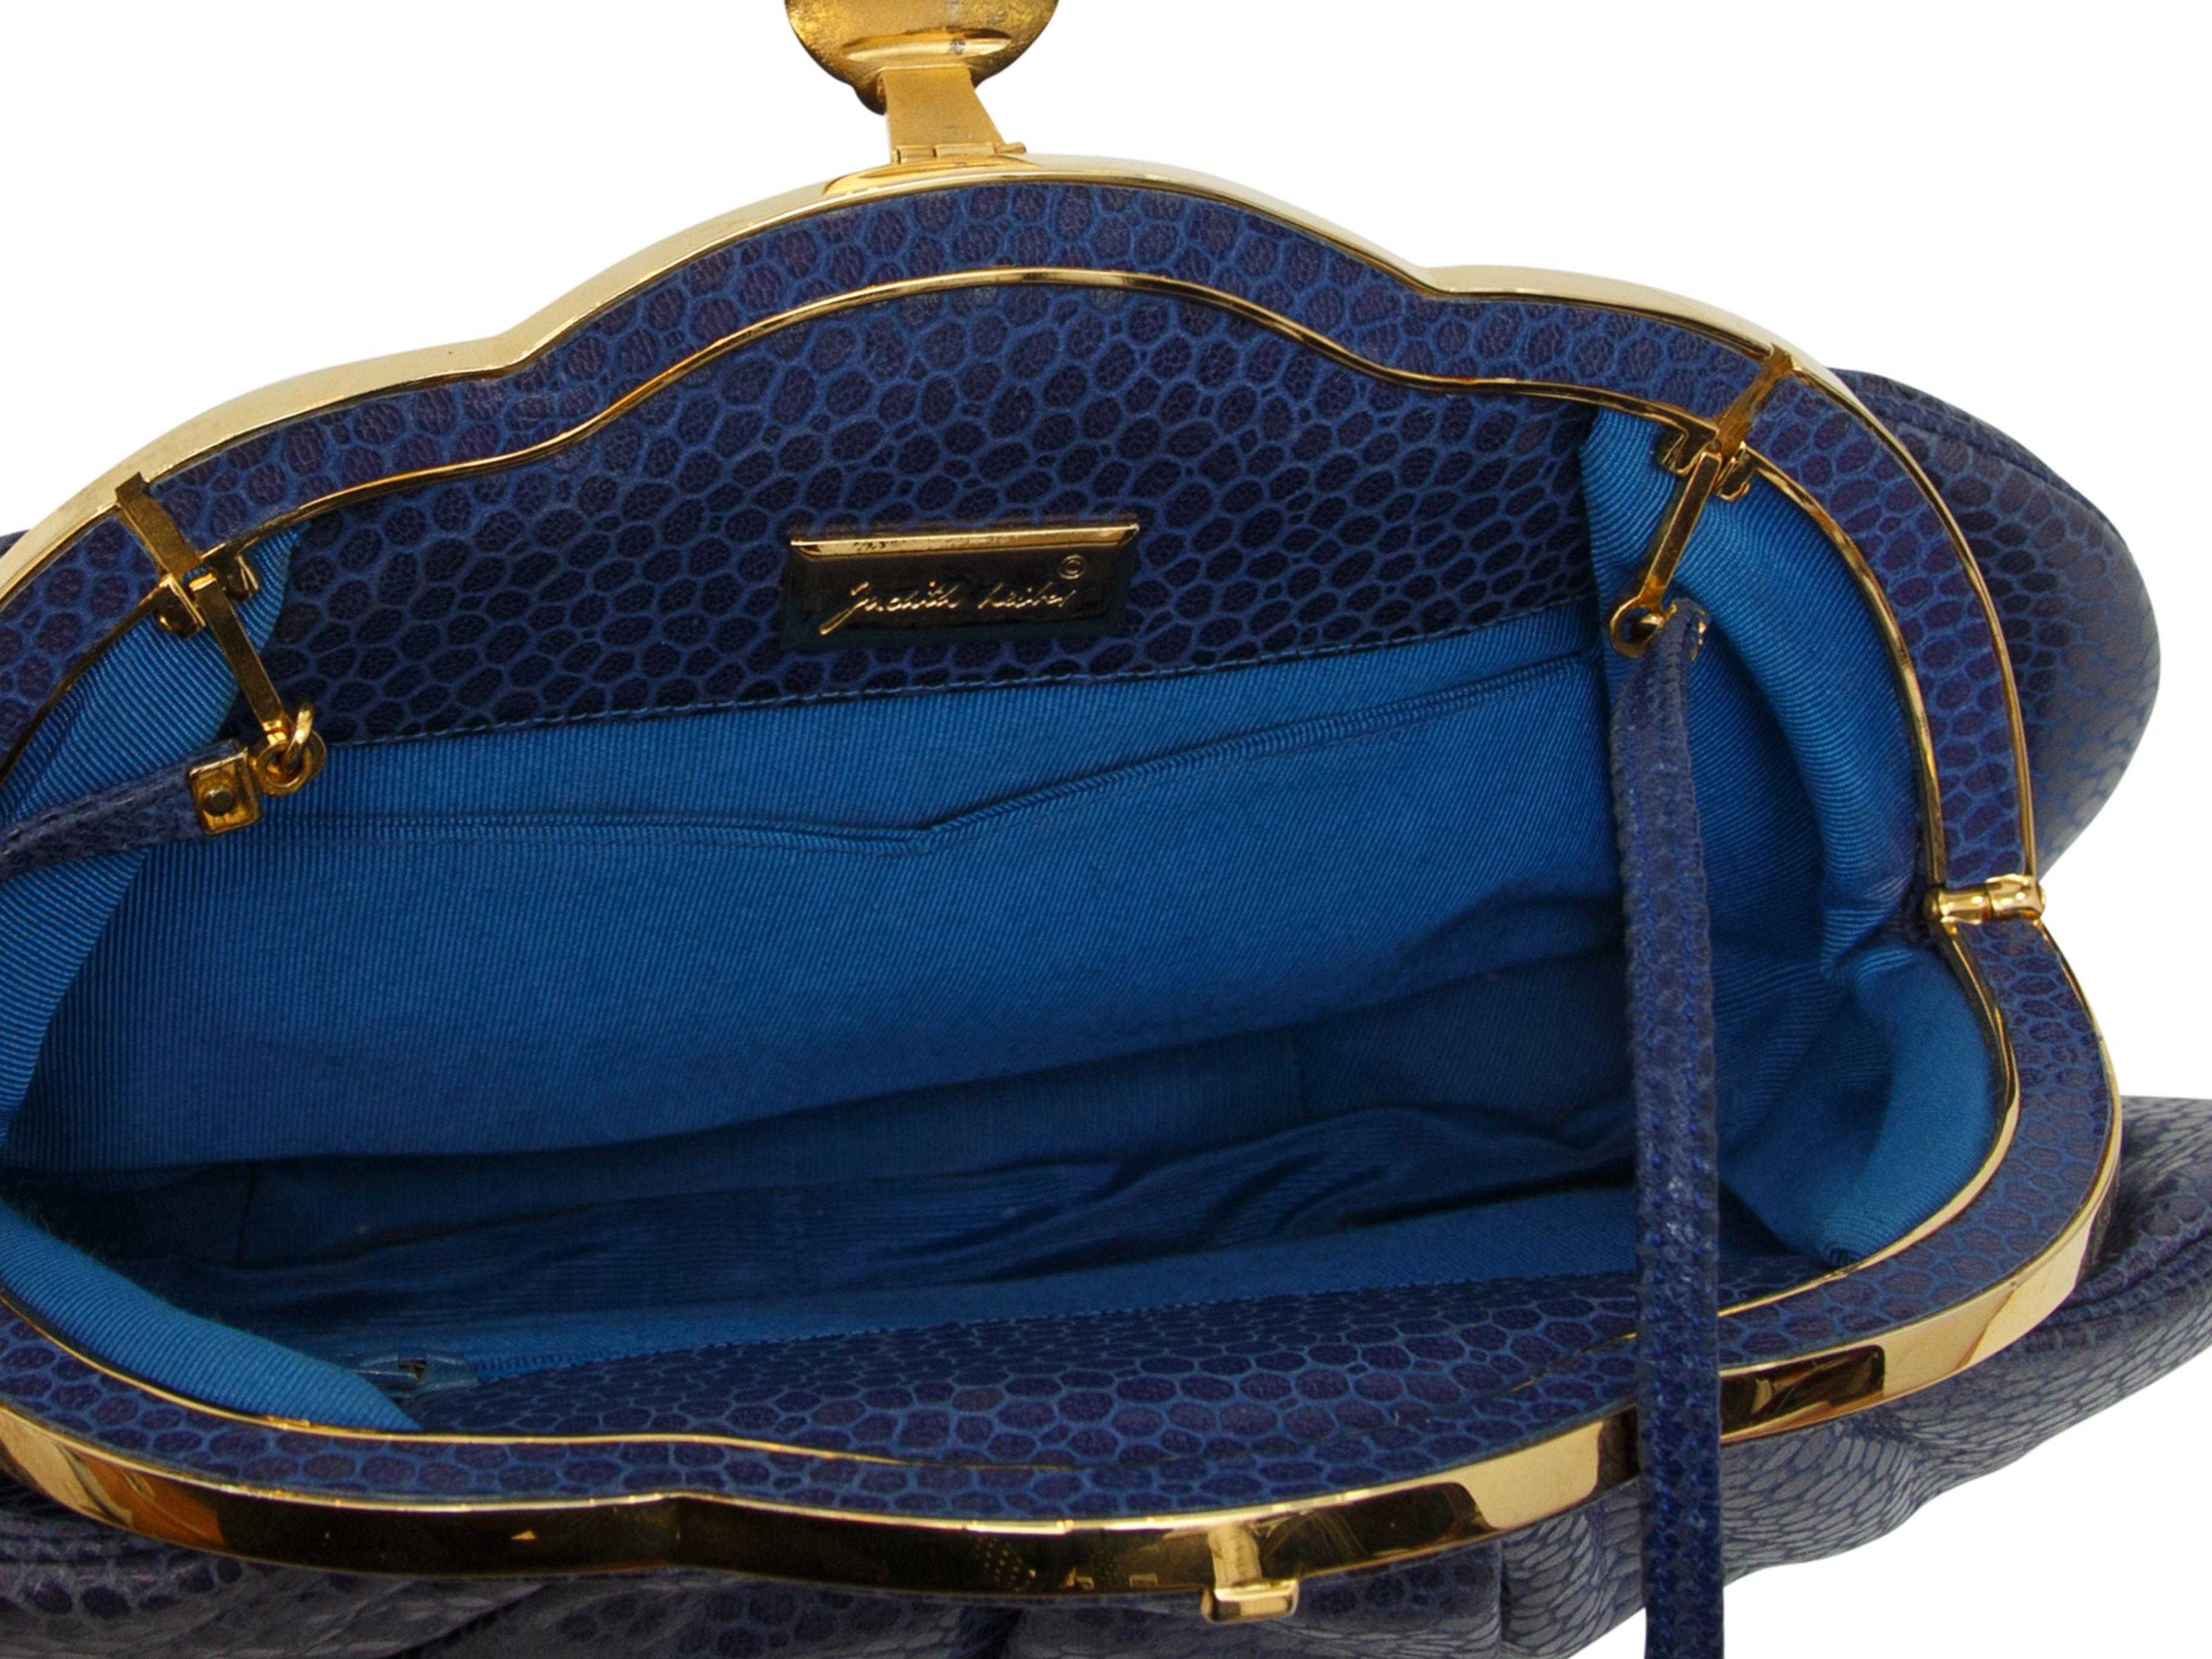 Product details: Blue reptile clutch by Judith Leiber. Gold-tone hardware. Detachable shoulder strap. Interior pocket. Embellished closure at front. 11